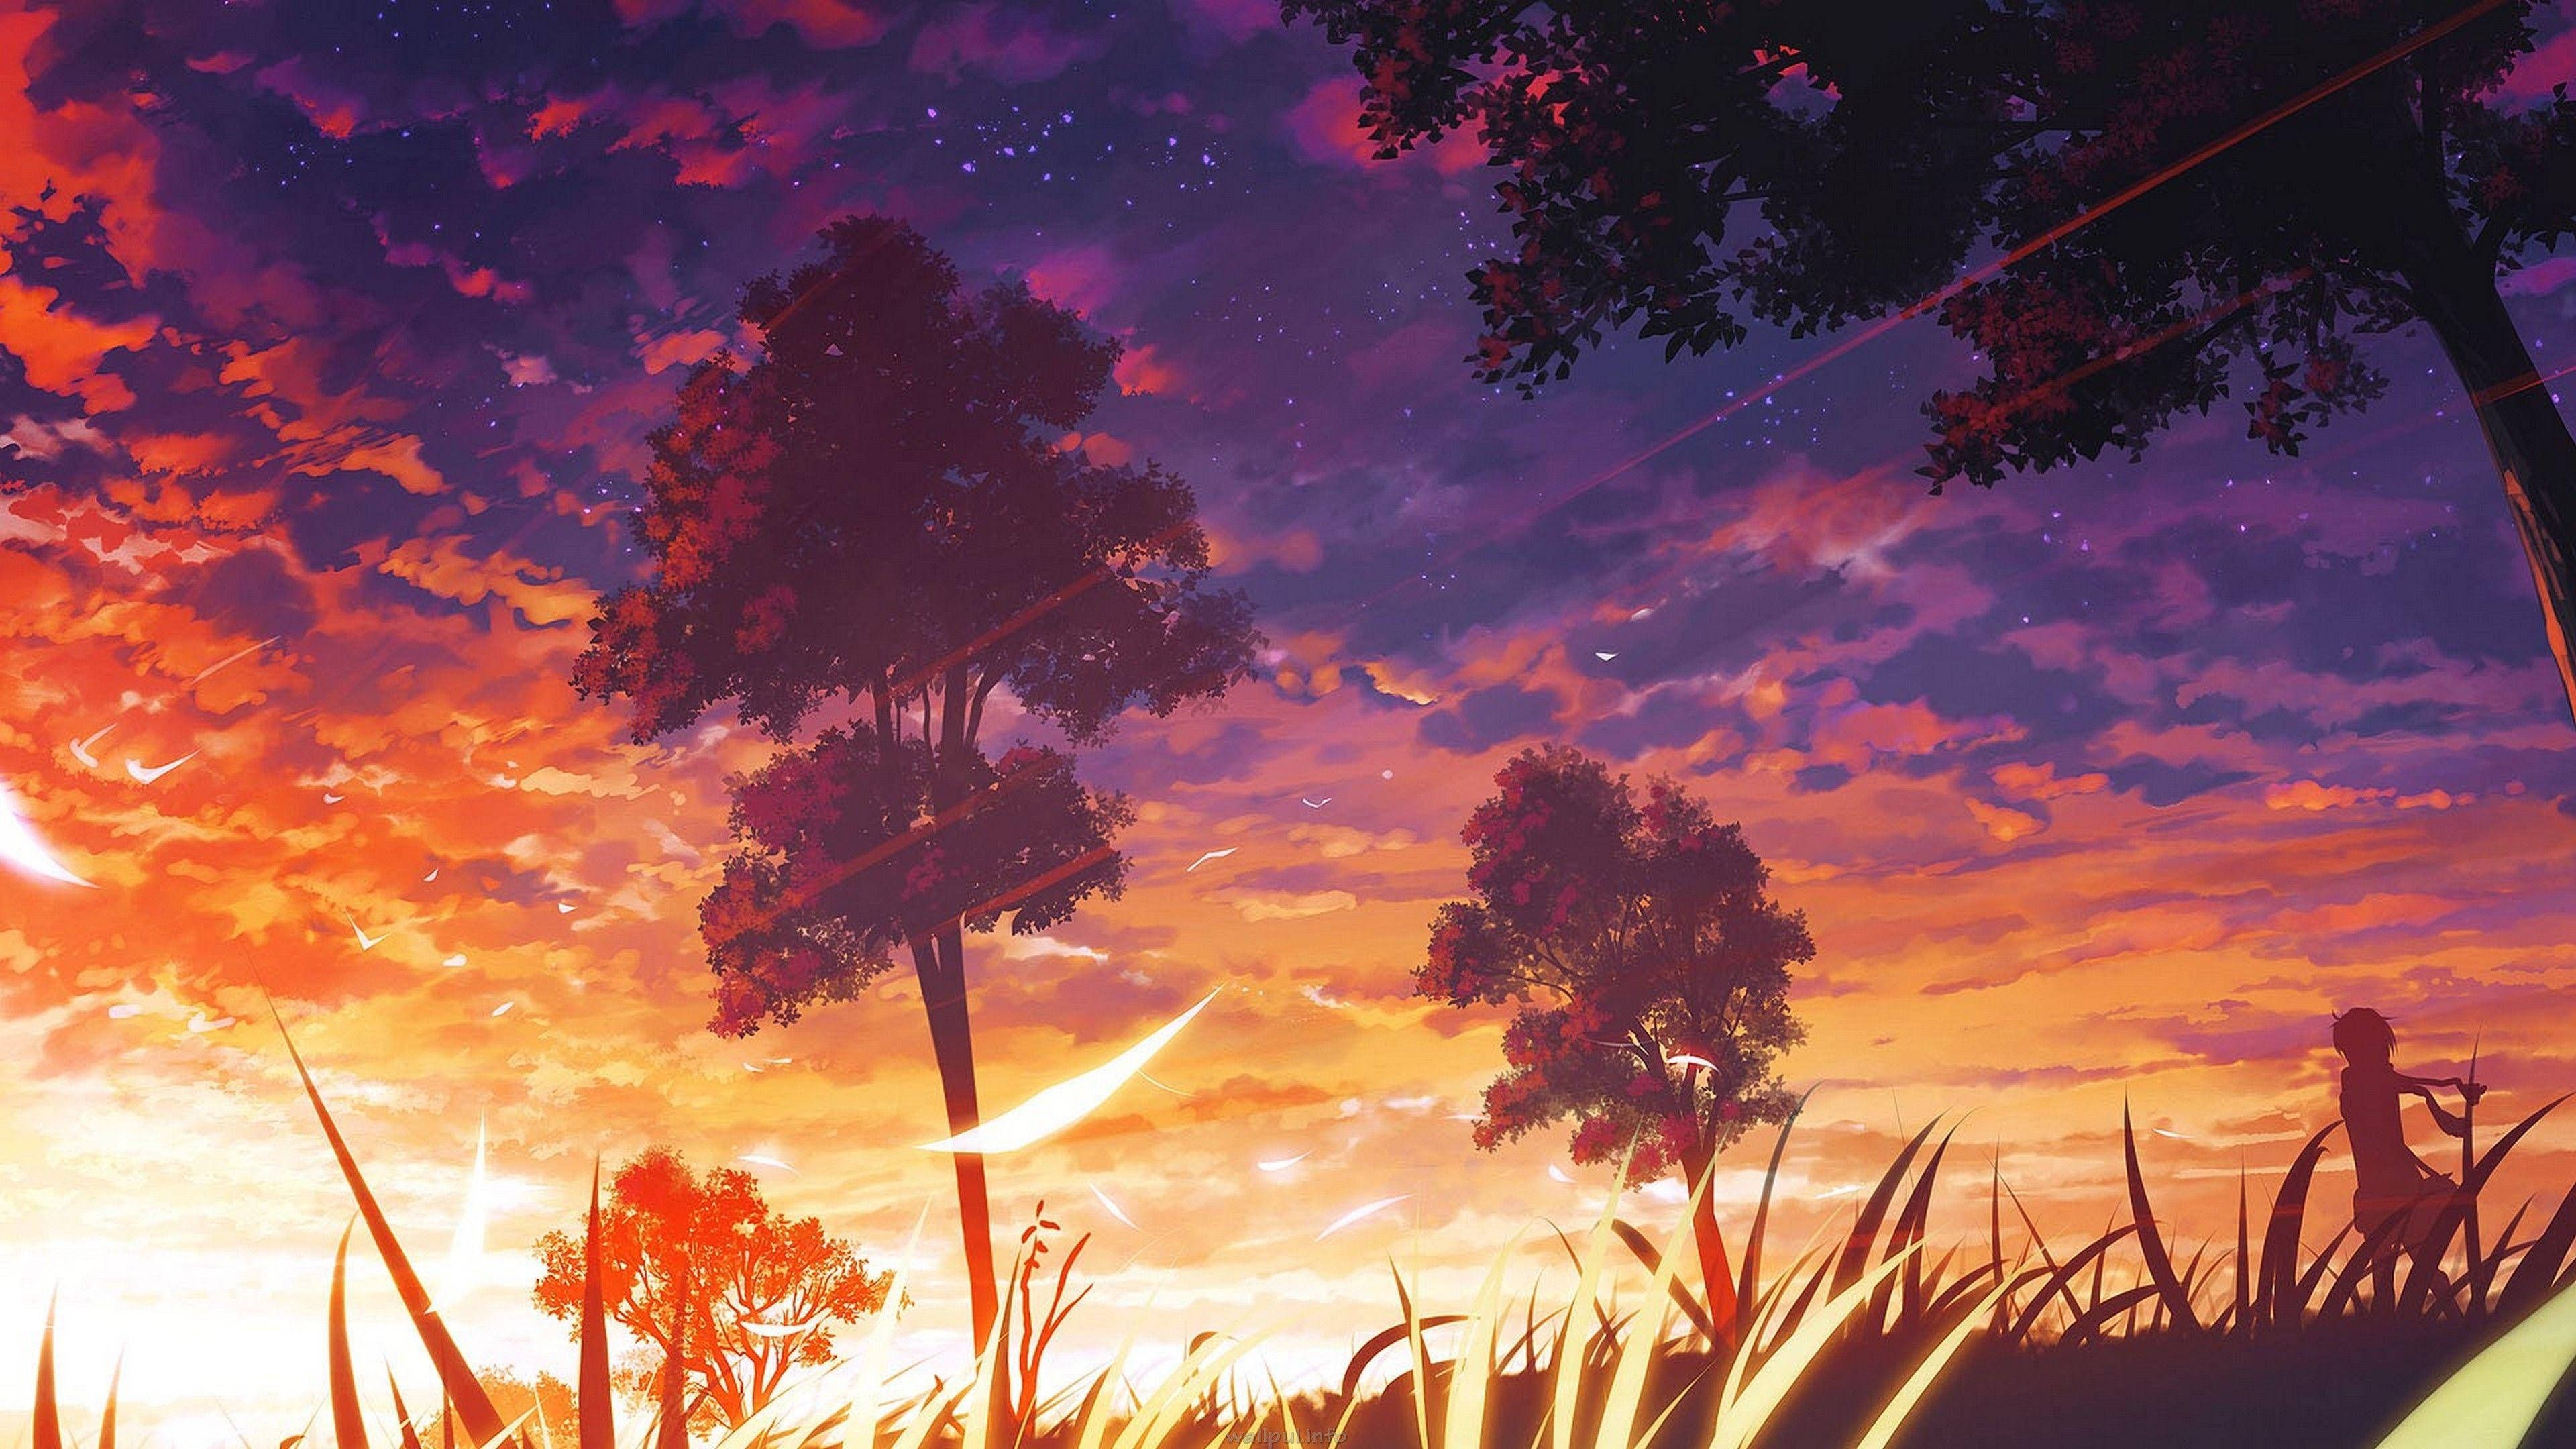 Download HD Anime Sunset Landscape Wallpaper